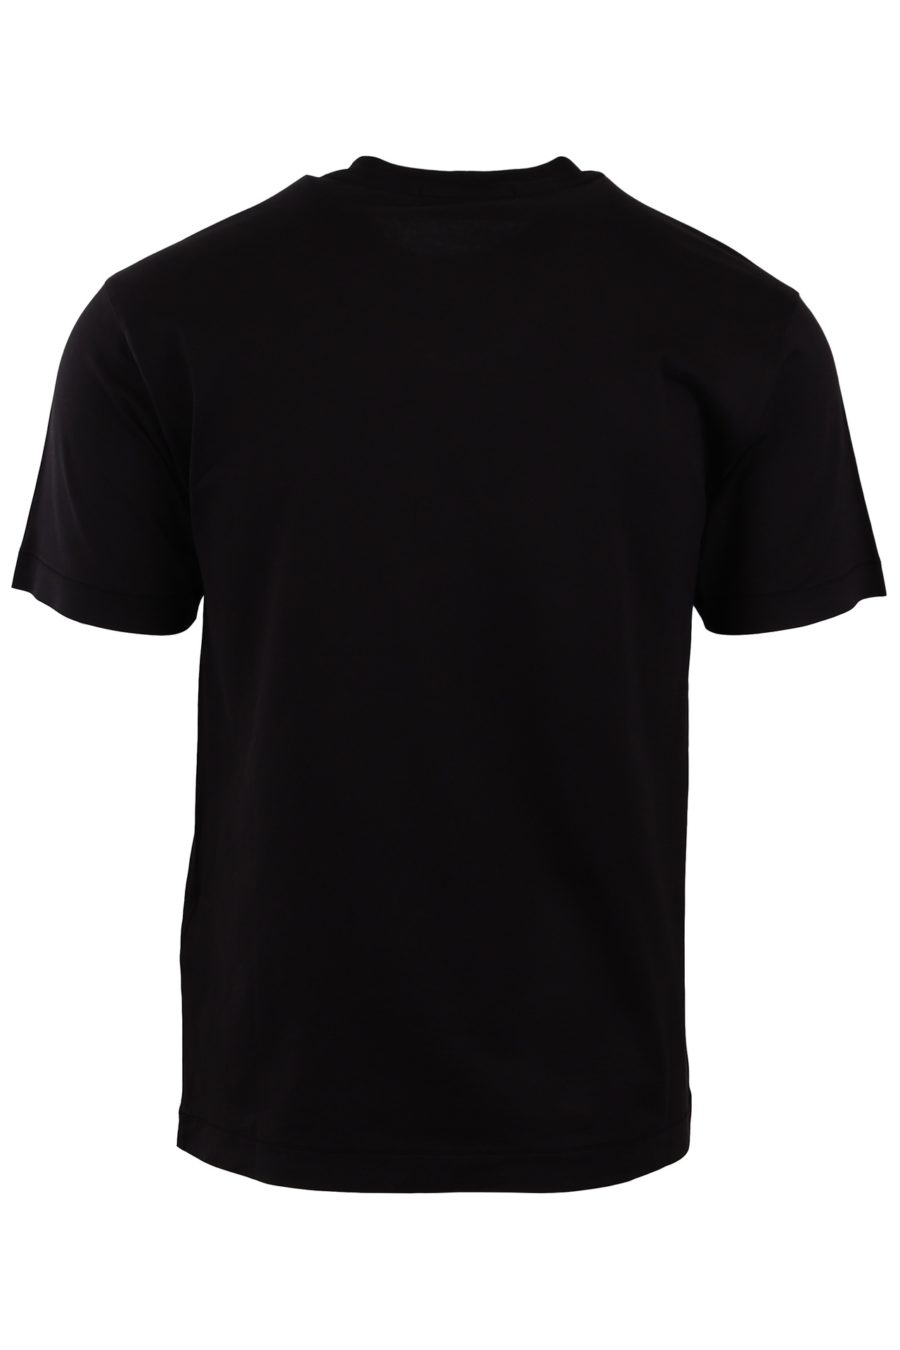 Camiseta Stone Island negra con logo parche - acdc5929418009adbdda4a7ecba1b7730397024d 1